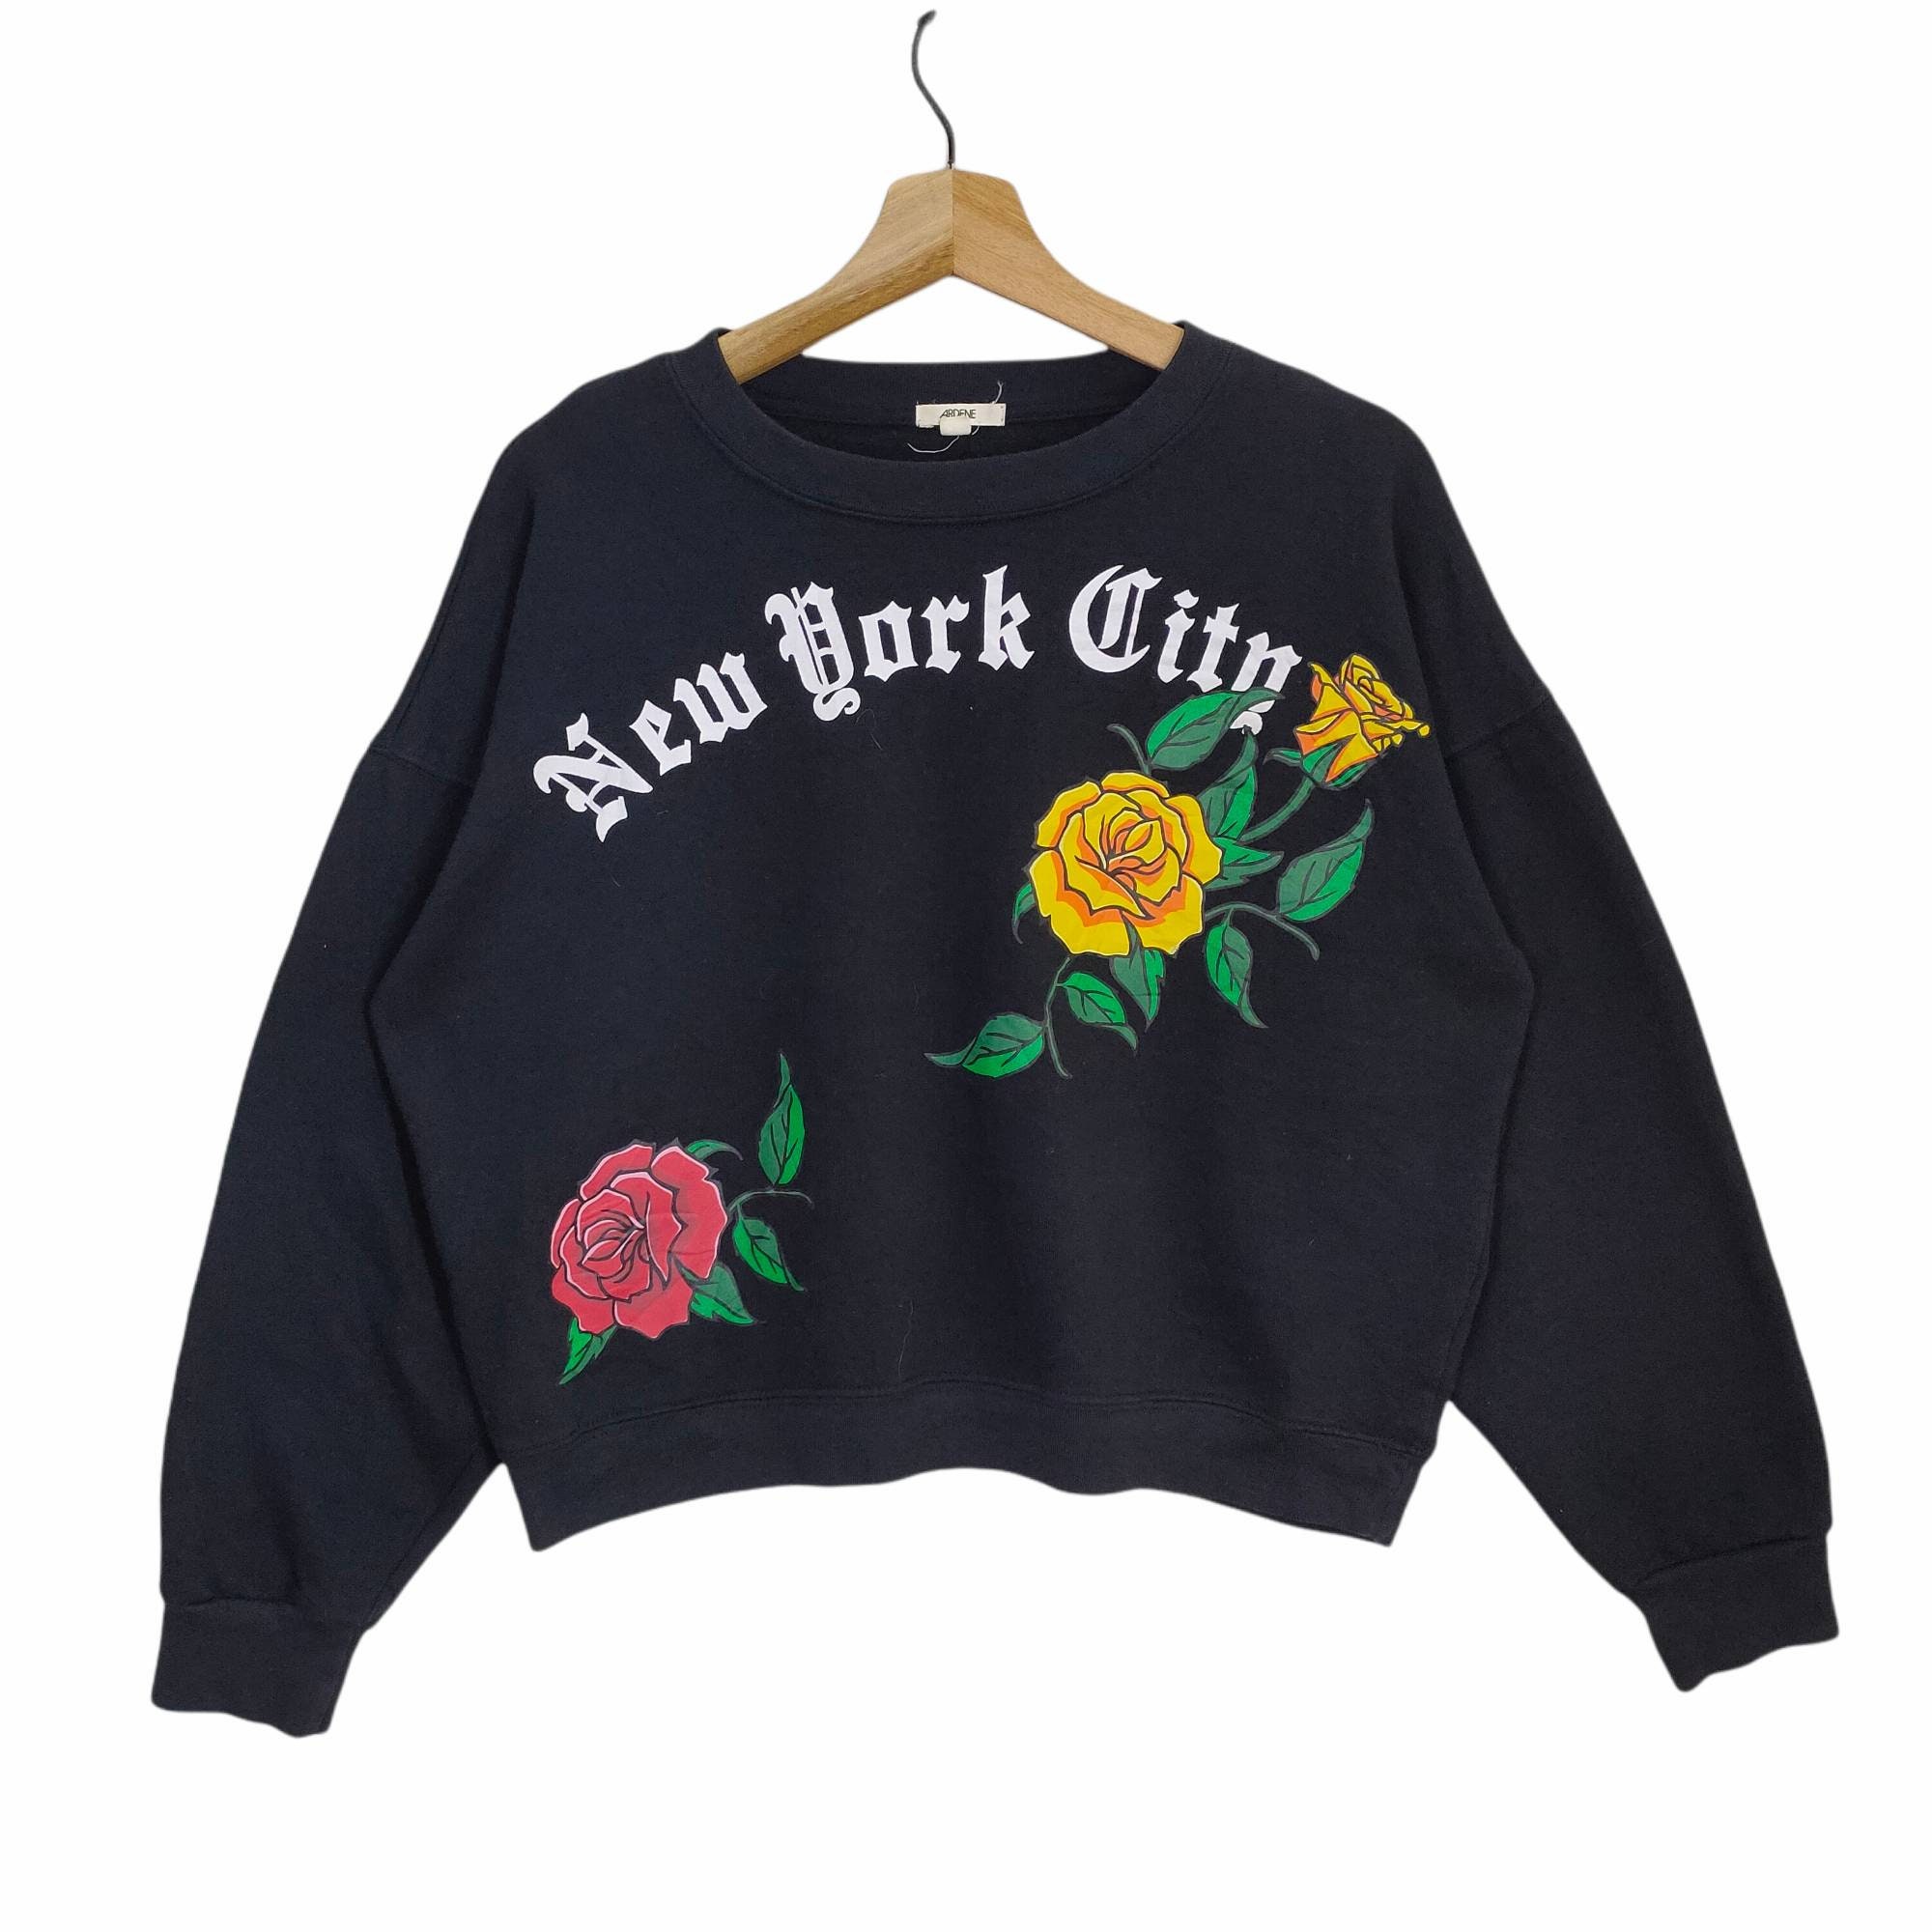 Floral Printed Crop Sweatshirt Large Vintage Style Rose New York City  Sweater Jumper Pullover Crewneck Black Womens Size L 